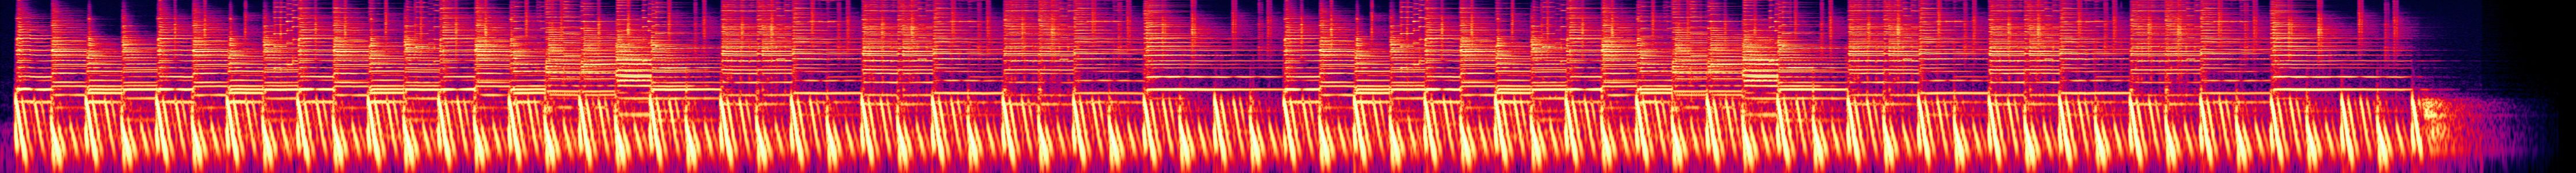 Science and Health - Spectrogram.jpg